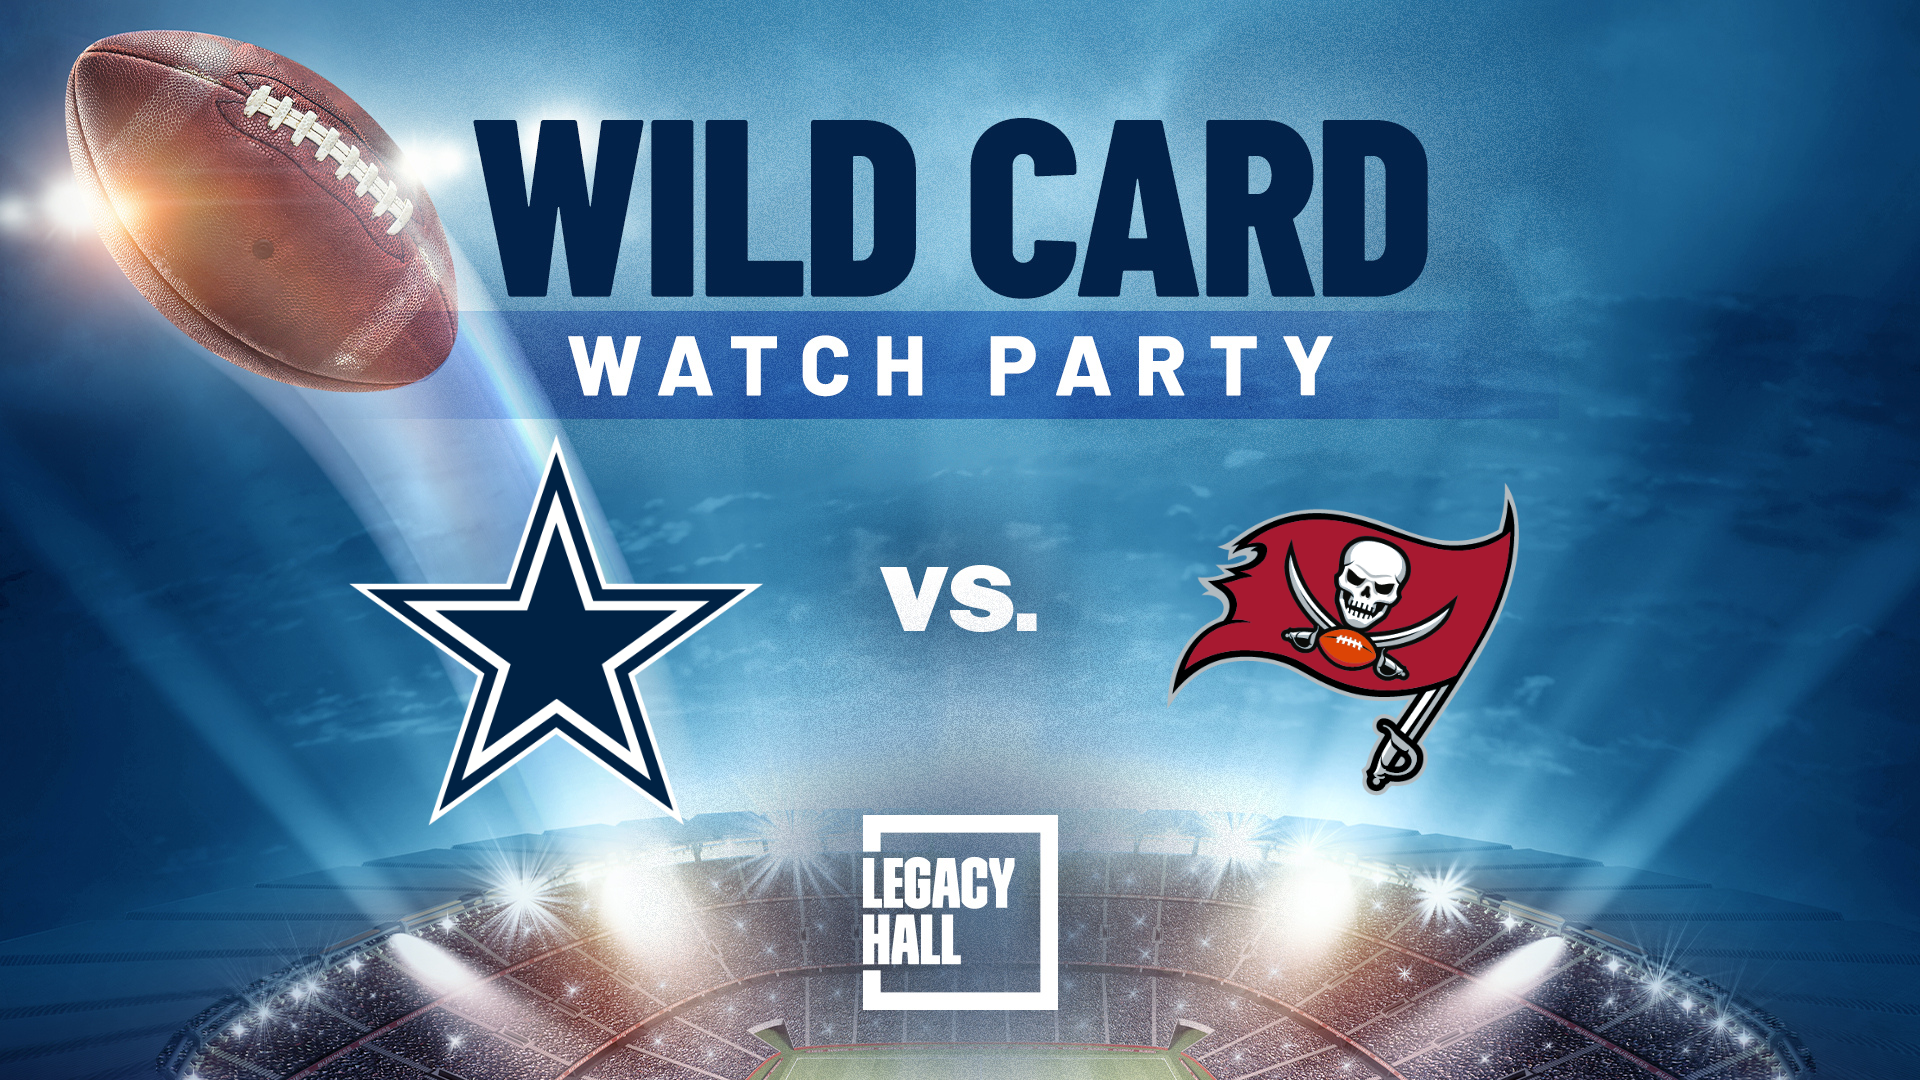 Cowboys vs Buccaneers Wild Card Watch Party - hero